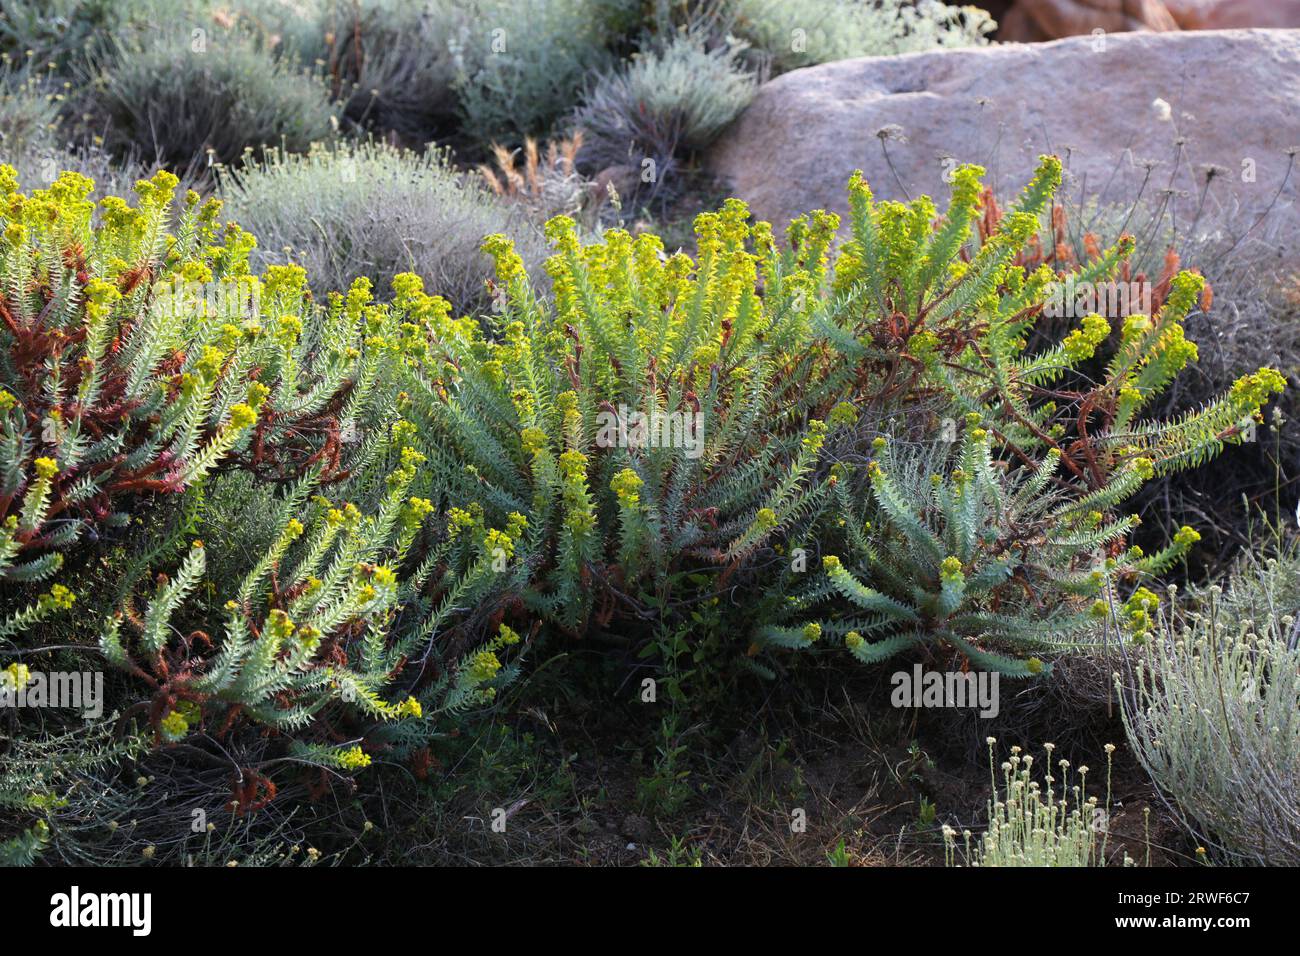 Italy Sardinia island nature. Mediterranean plant species: flowers of Little fir spurge (Euphorbia pithyusa). Stock Photo